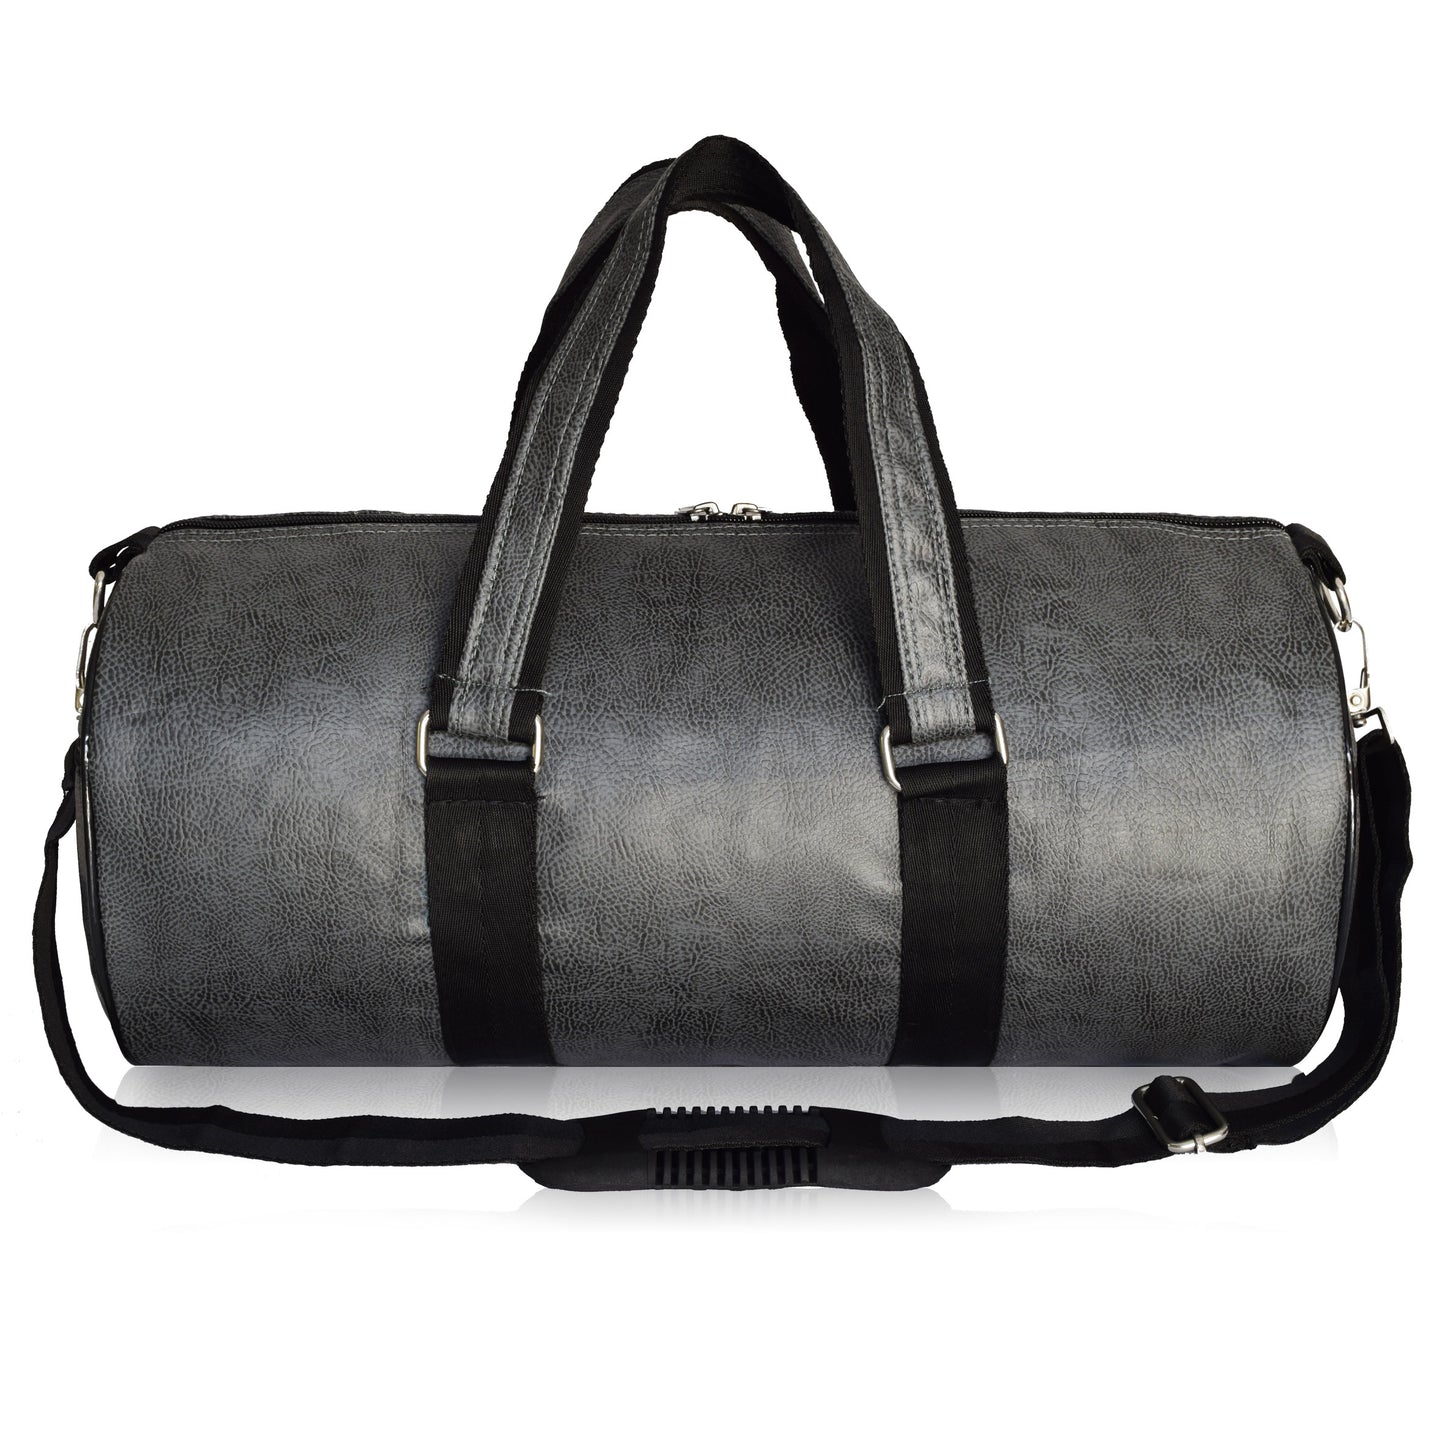 Crinds Duffel Bag - Grey Black